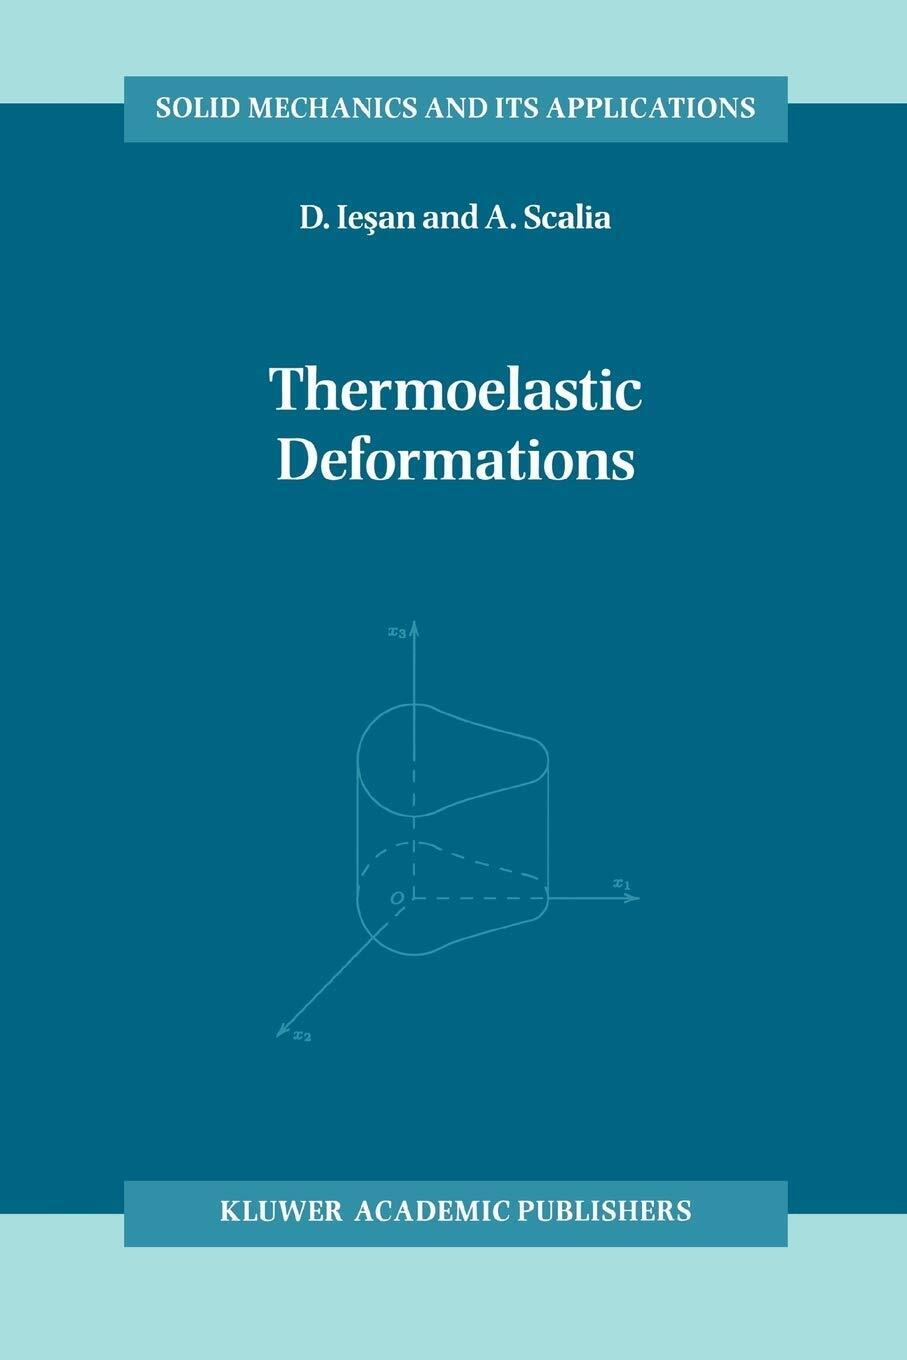 Thermoelastic Deformations - D. Iesan, Antonio Scalia - Springer, 2010